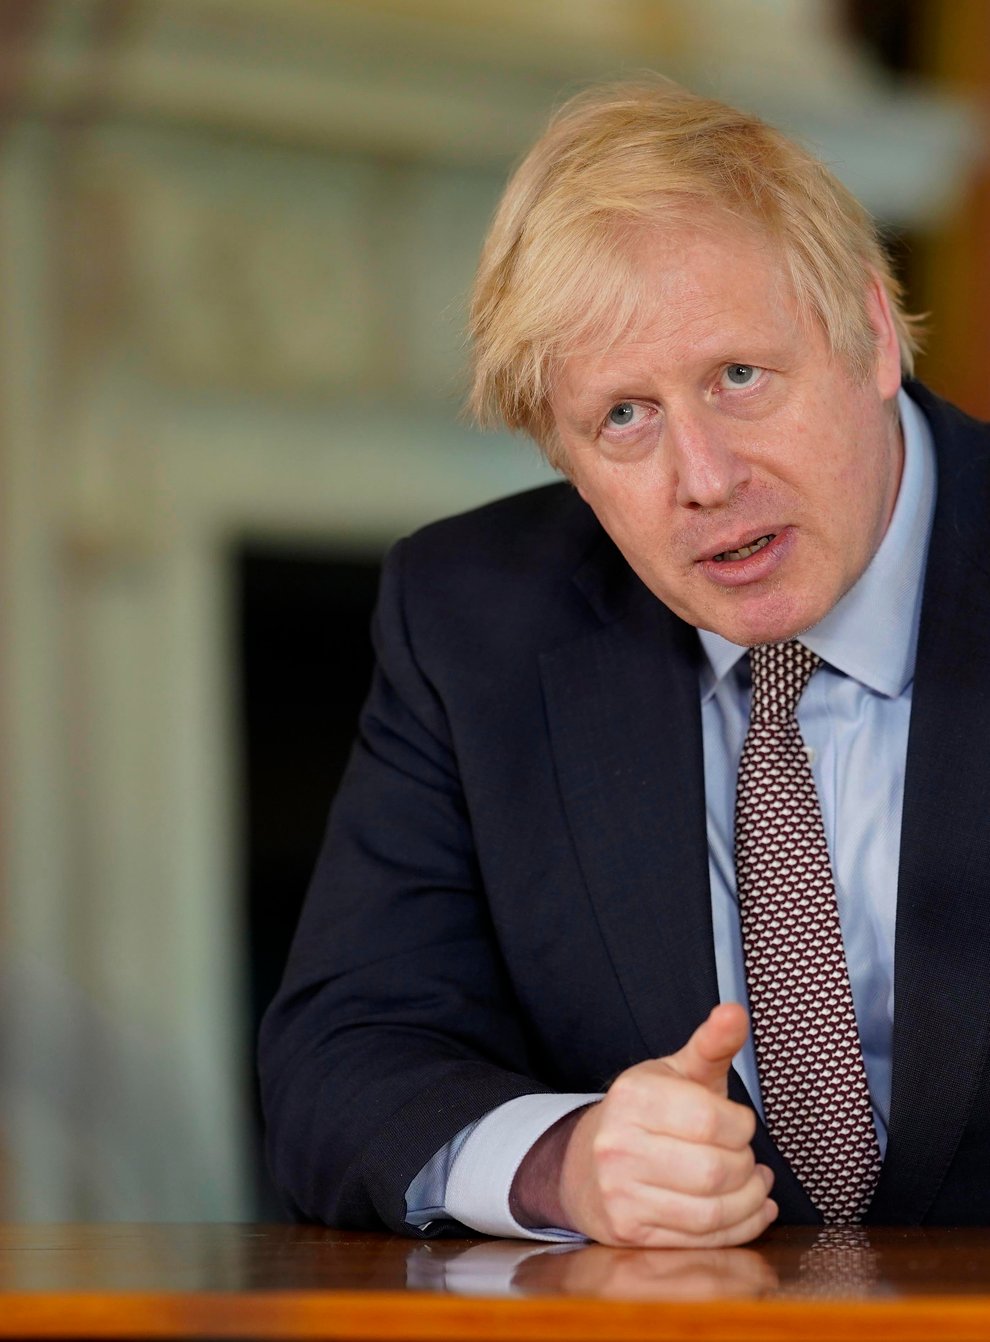 Prime Minister Boris Johnson addressing the nation about coronavirus from 10 Downing Street